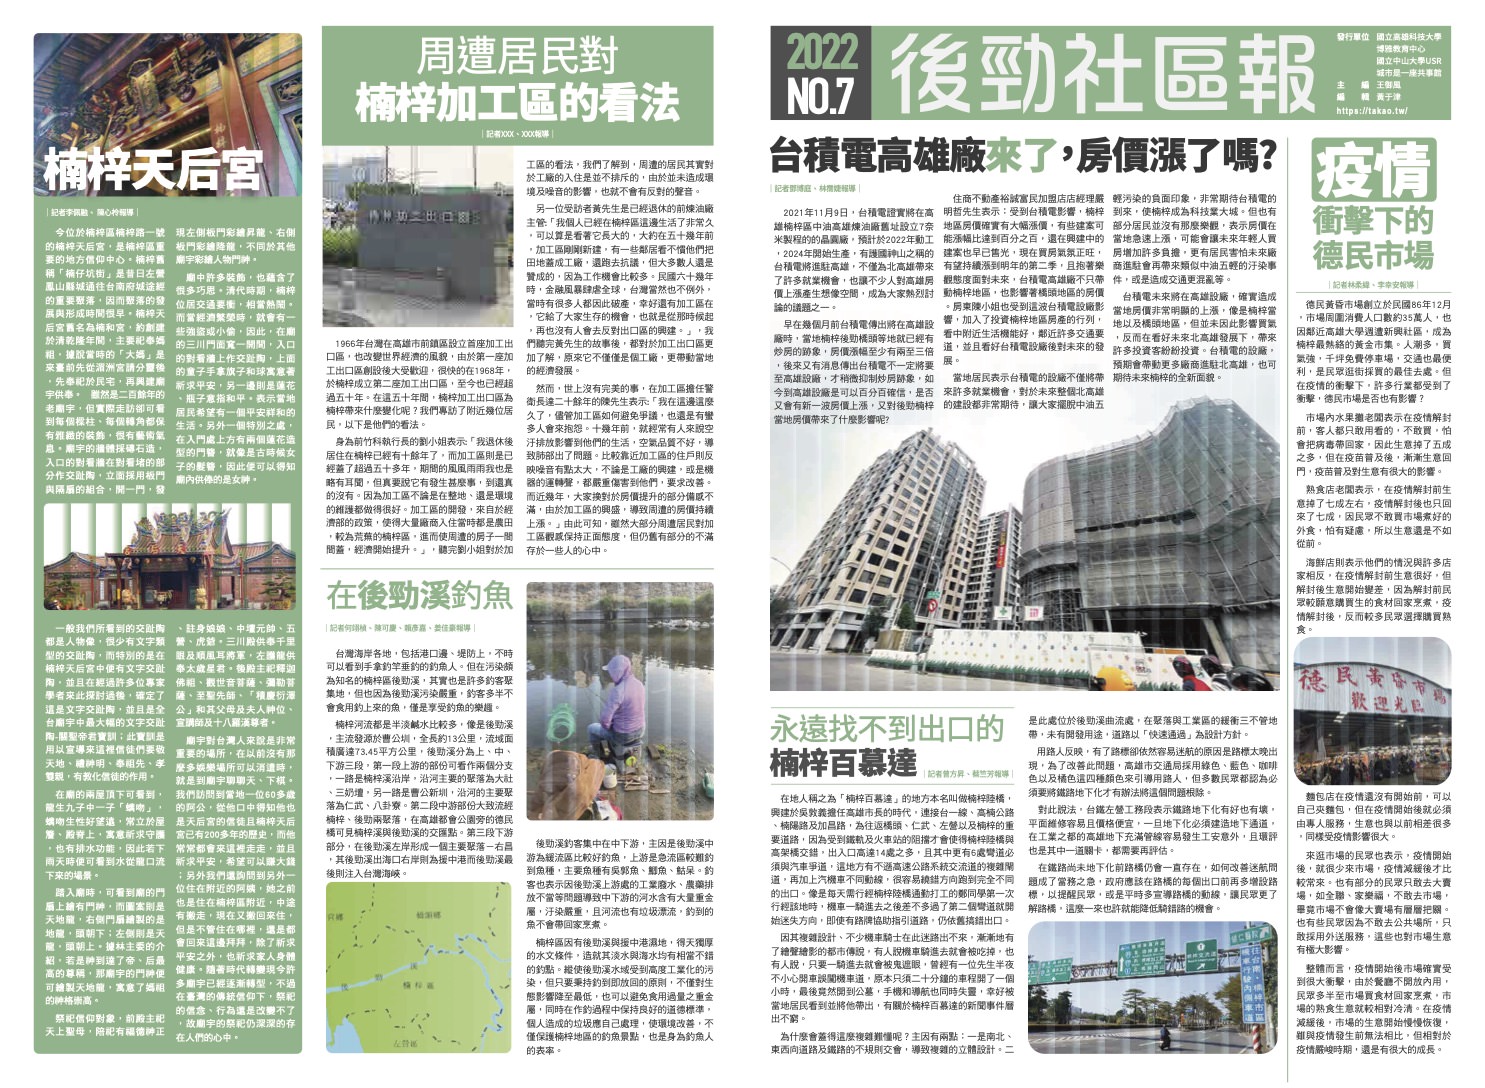 community news of houjing no.7 1